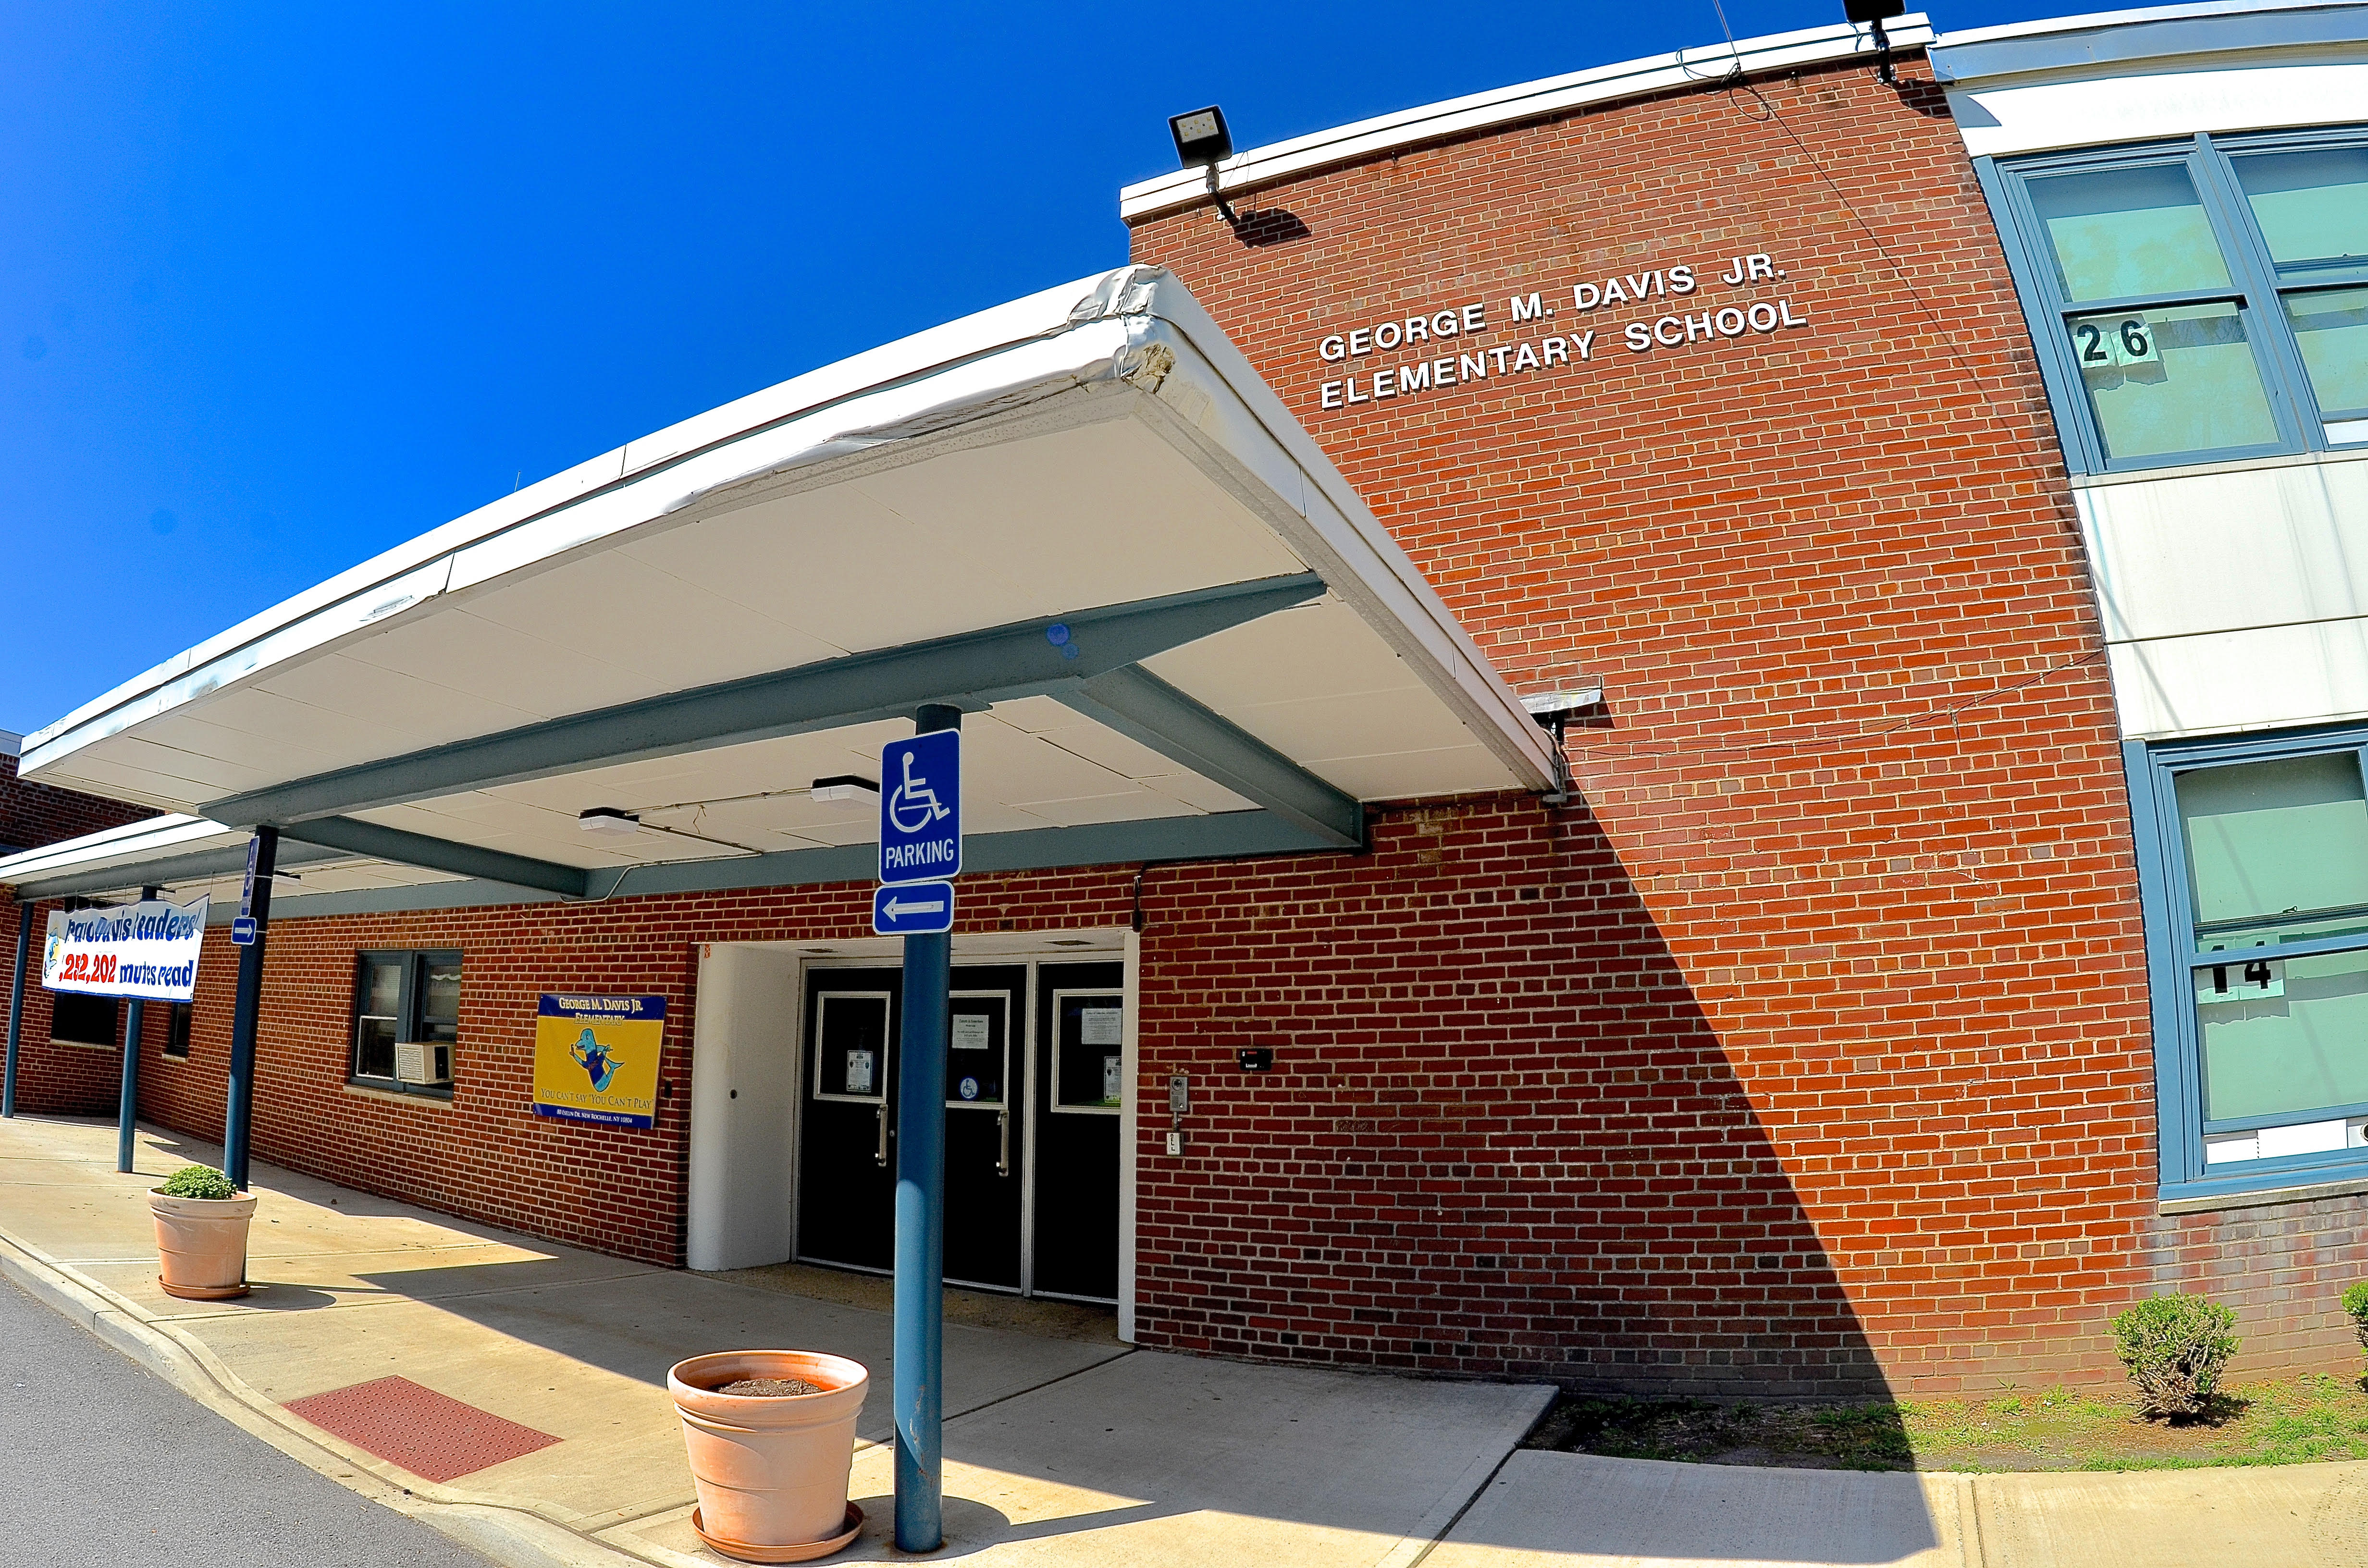 George M. Davis Jr. Elementary School